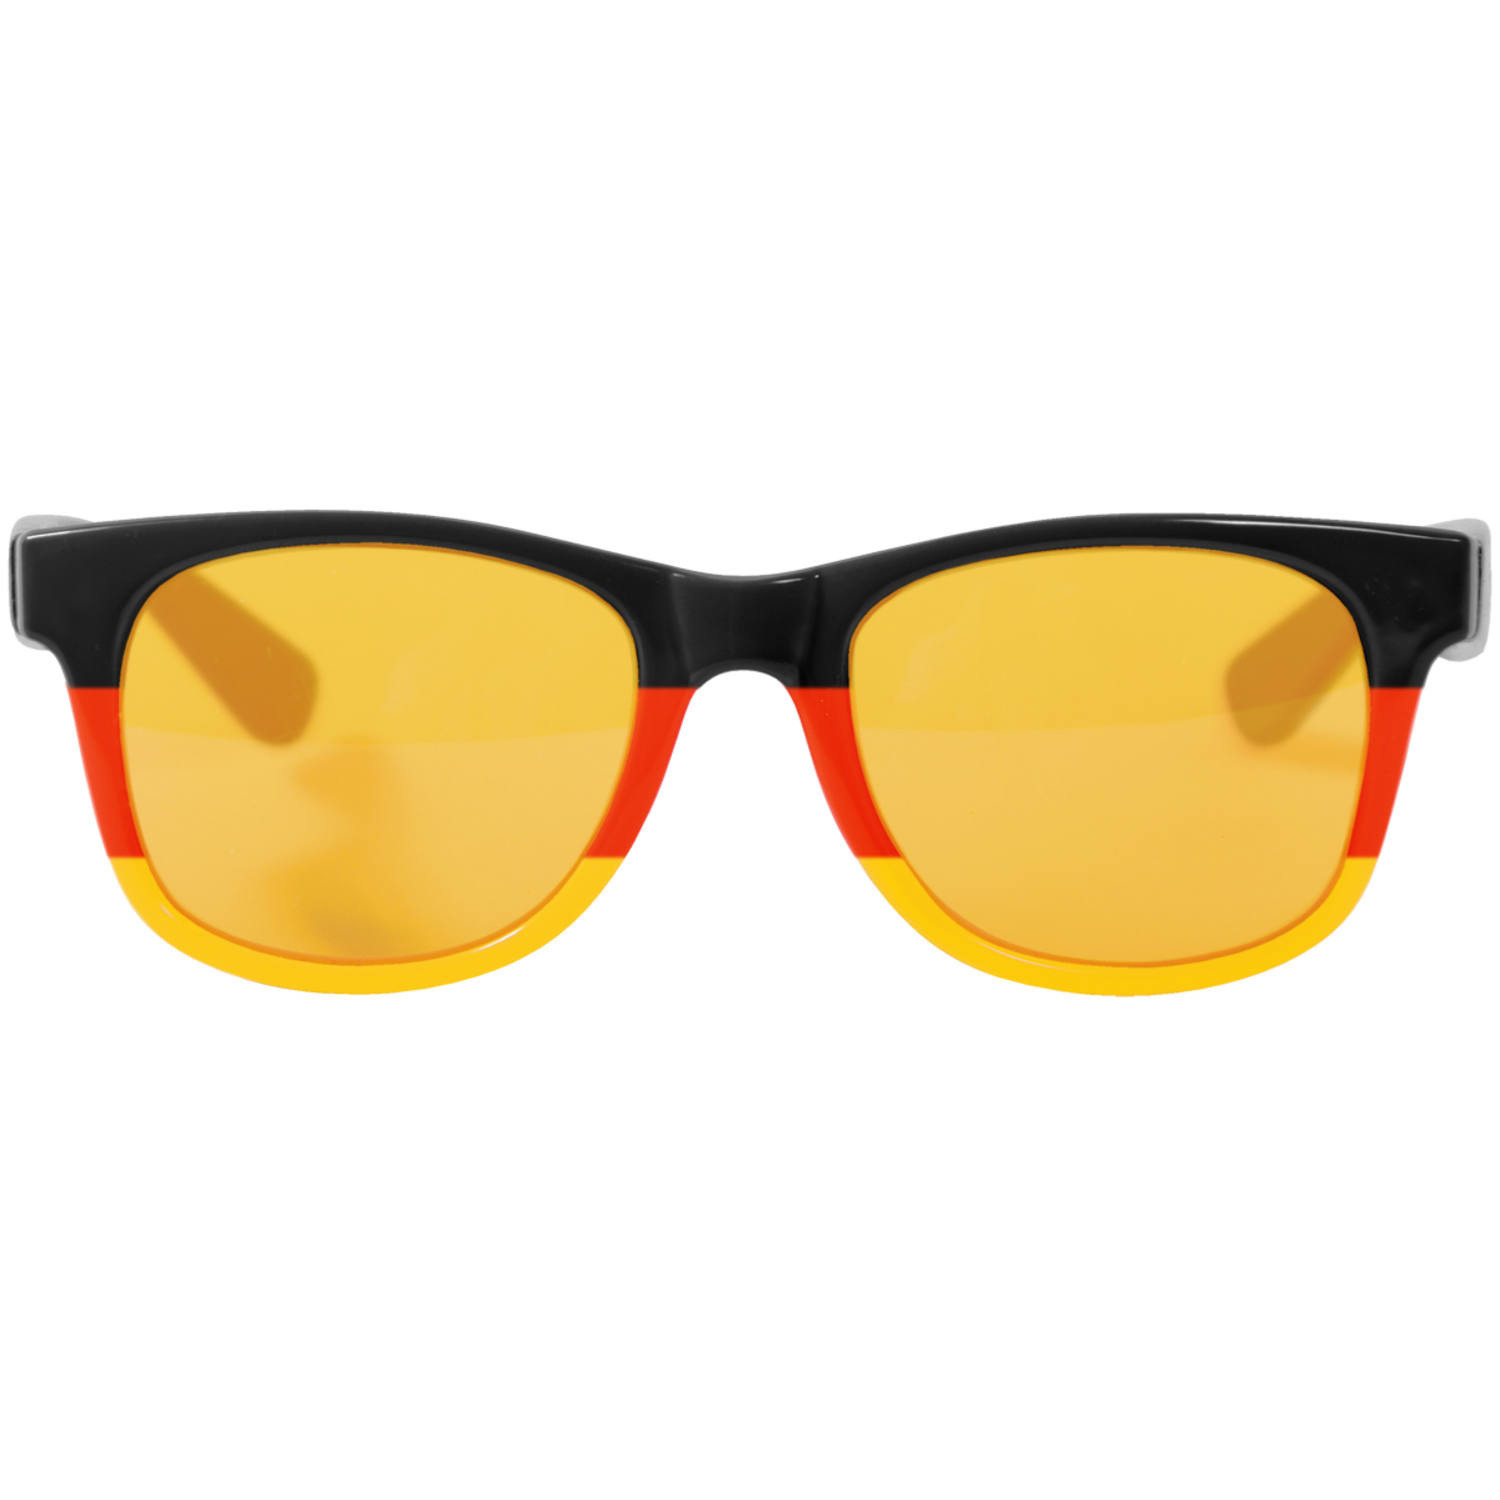 Blues type verkleed bril zwart, rood en geel